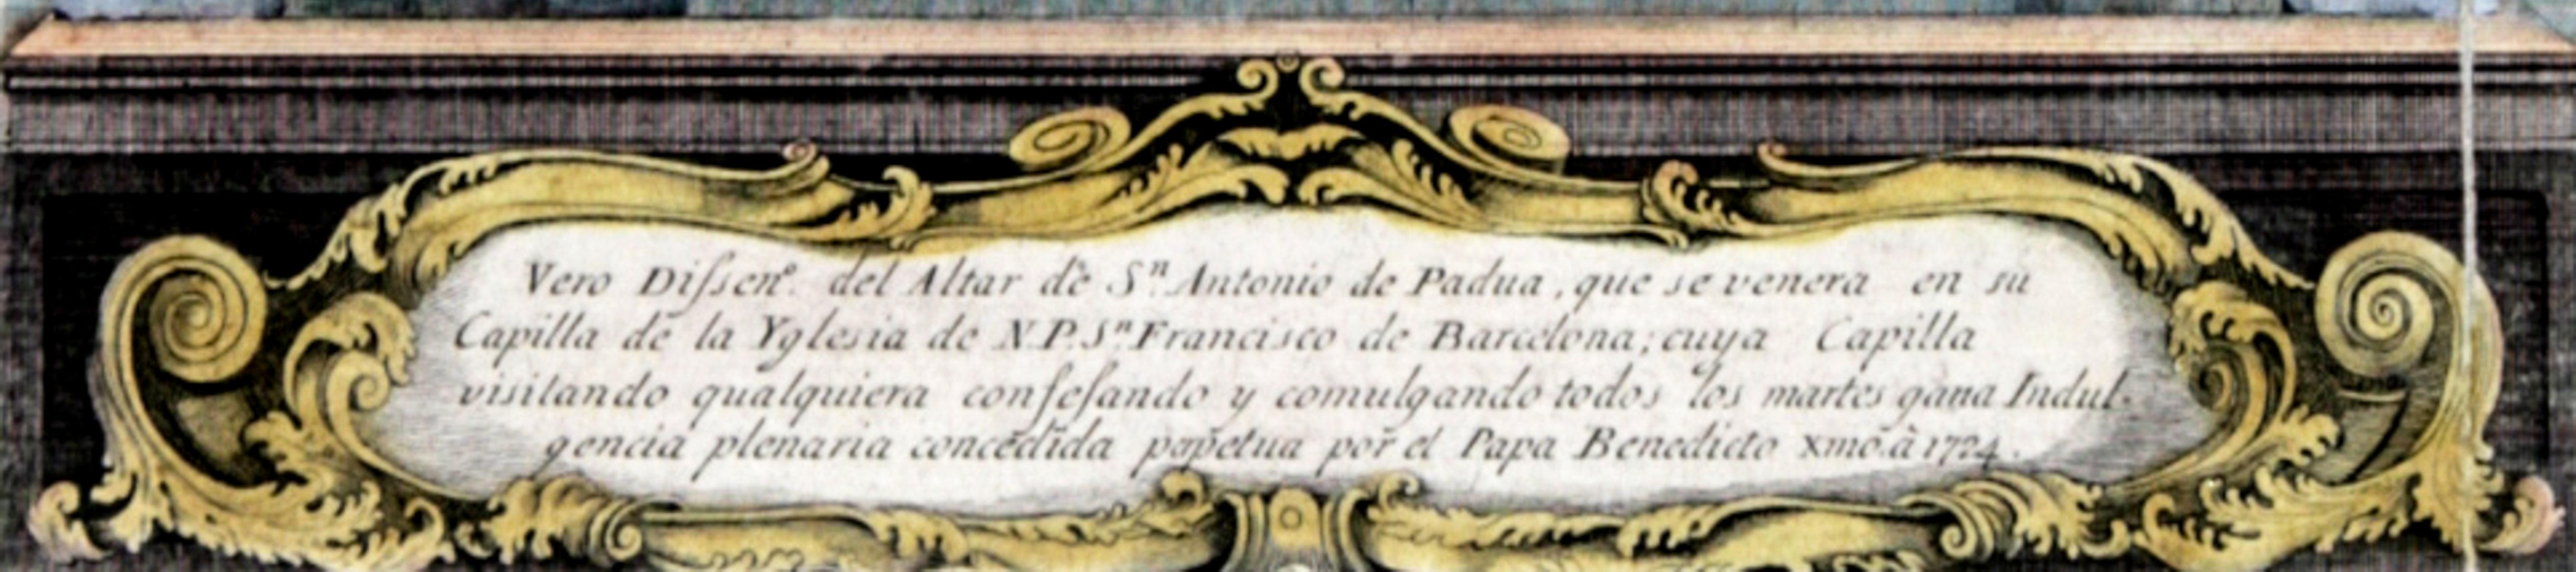 Altar de St. Antonio de Padua Hand Colored Engraving 1724 - Print by Unknown